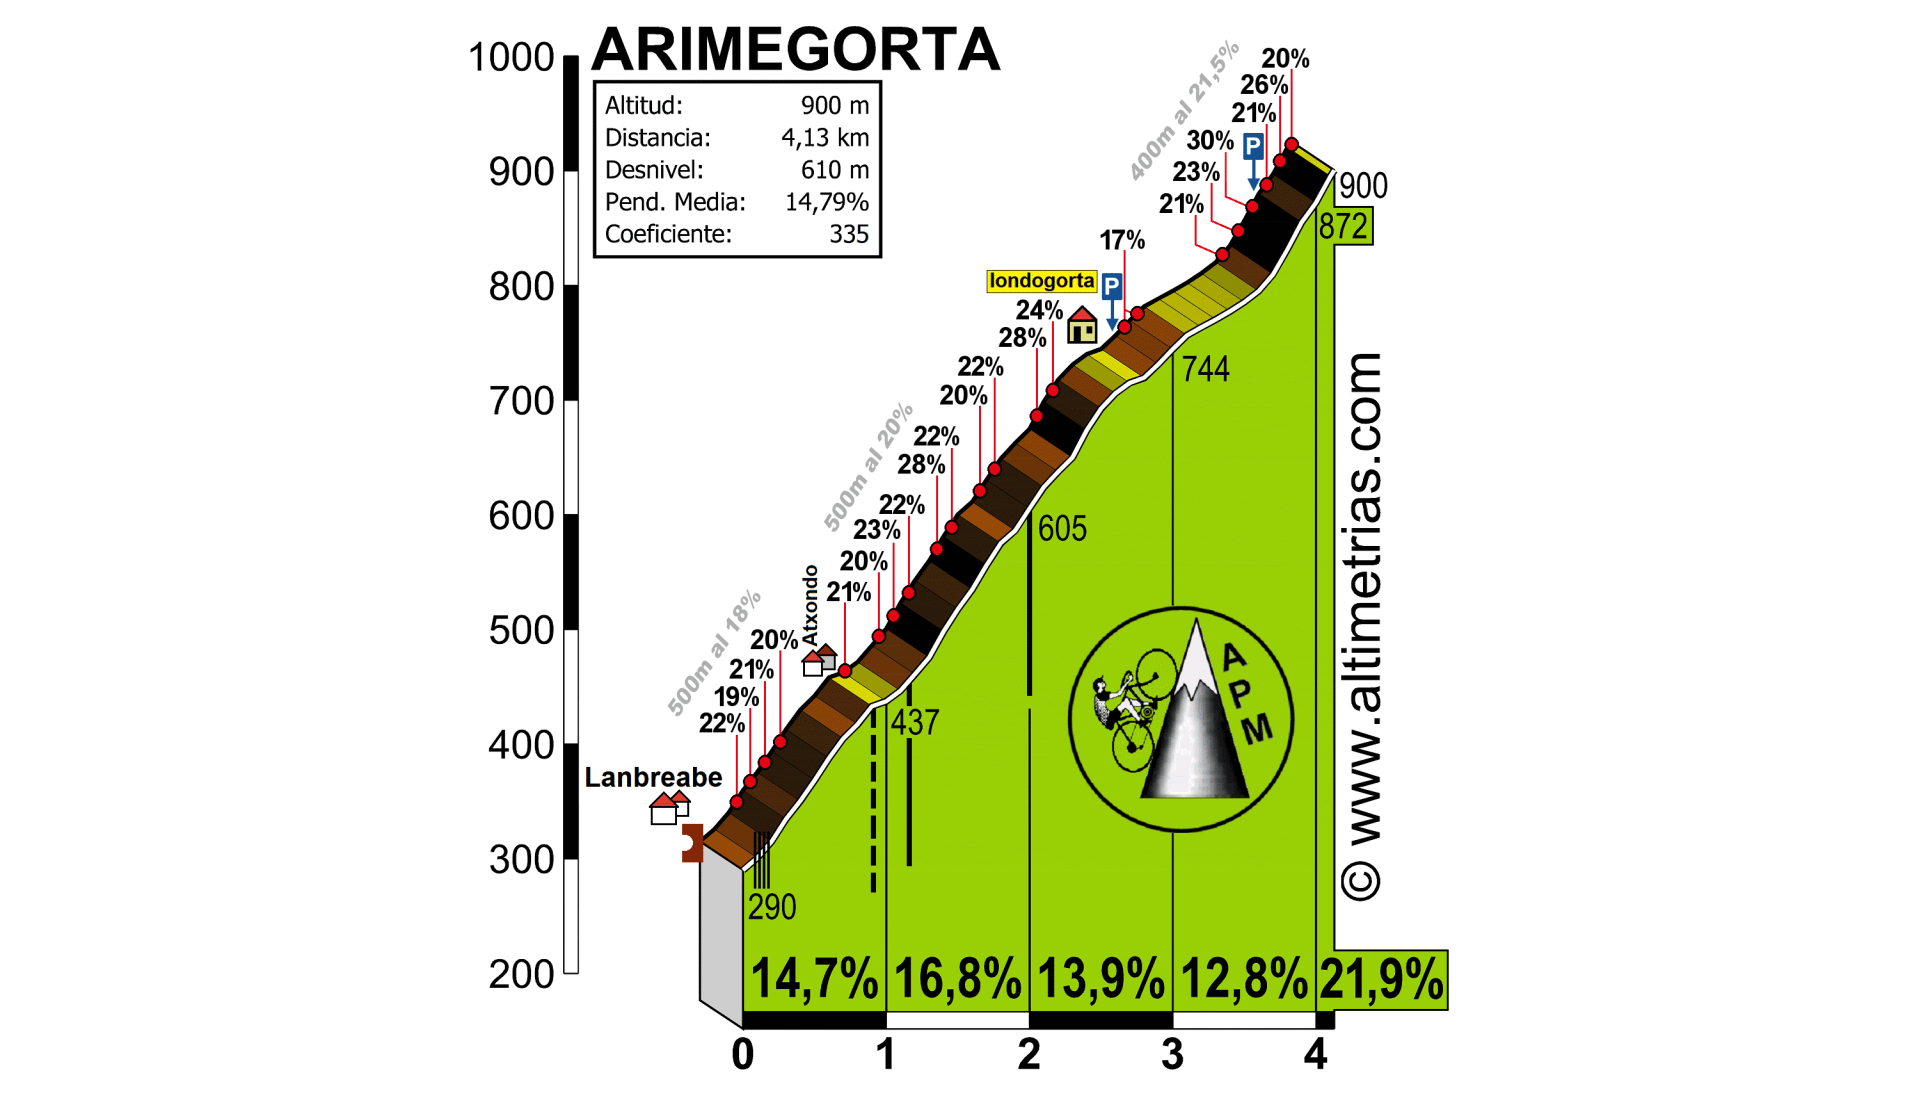 Arimegorta